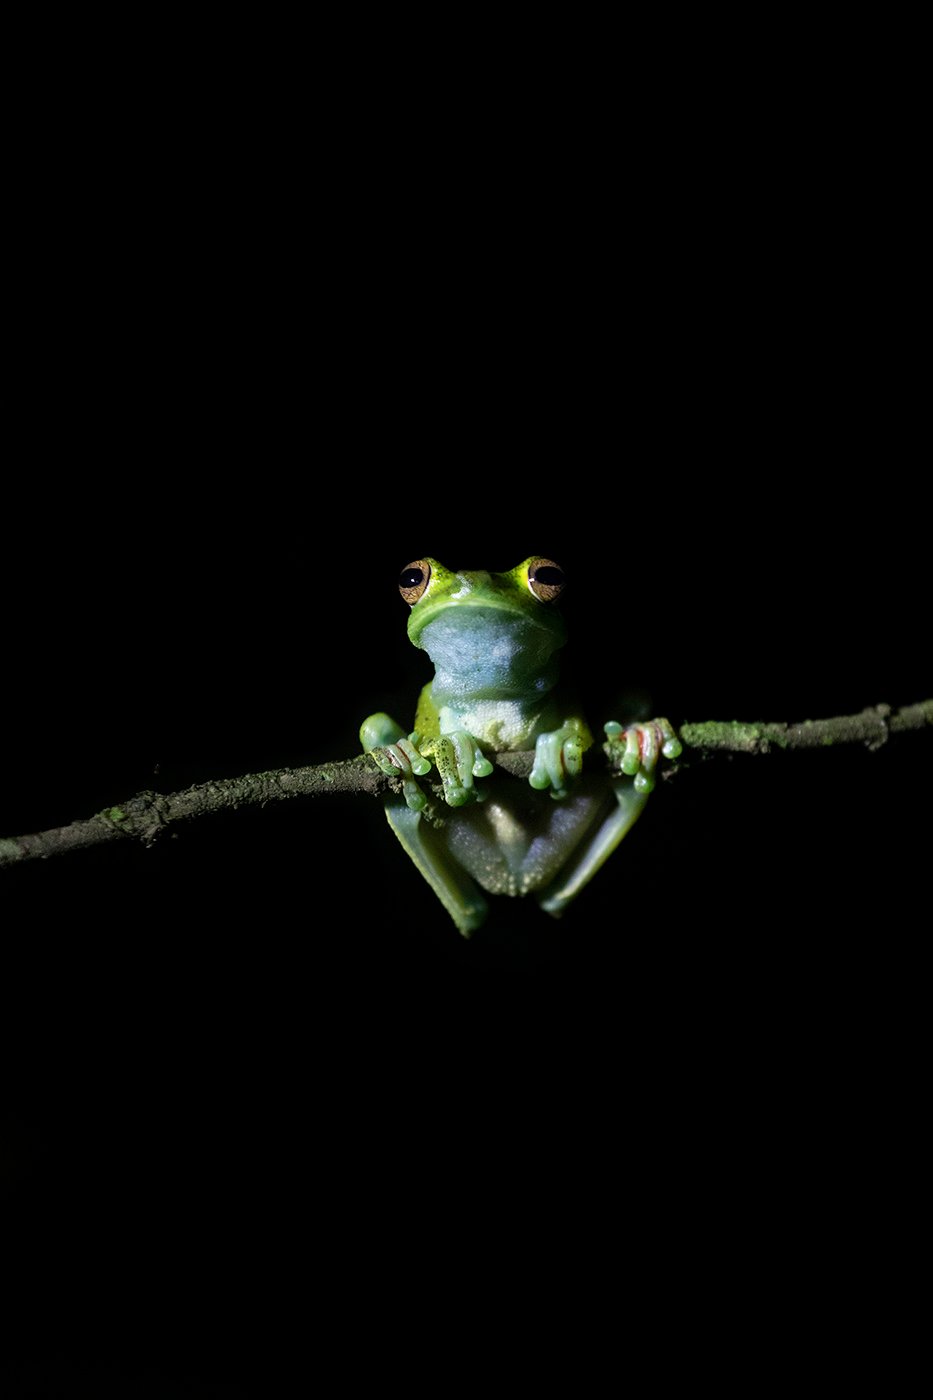 Costa Rica Red eye tree frog shot by Cristina Candel for Viajar magazine